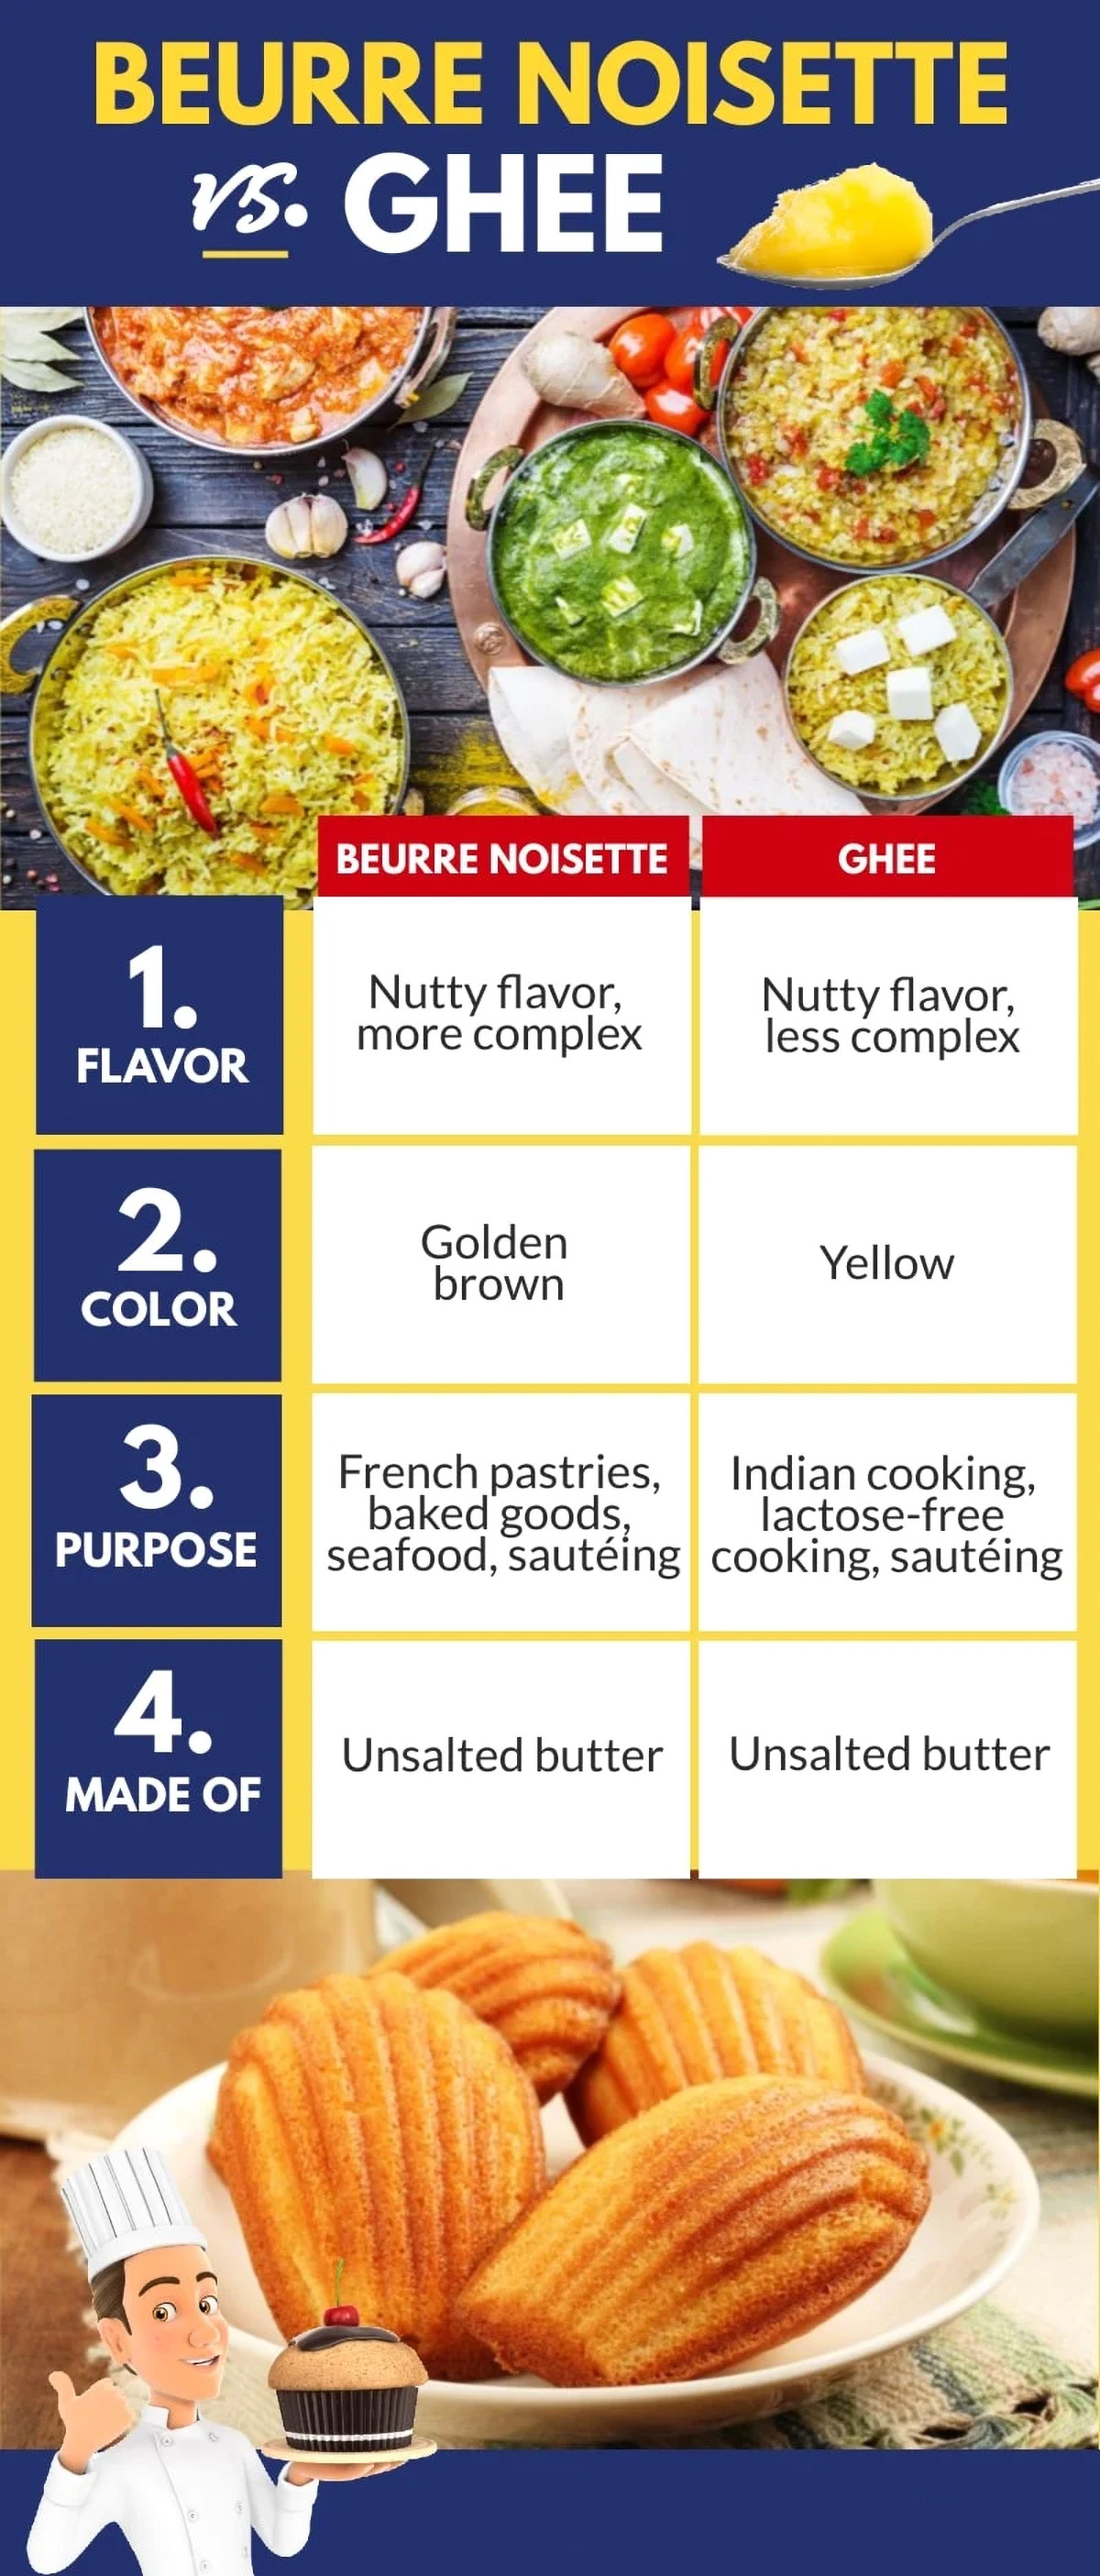 beurre noisette vs ghee infographic